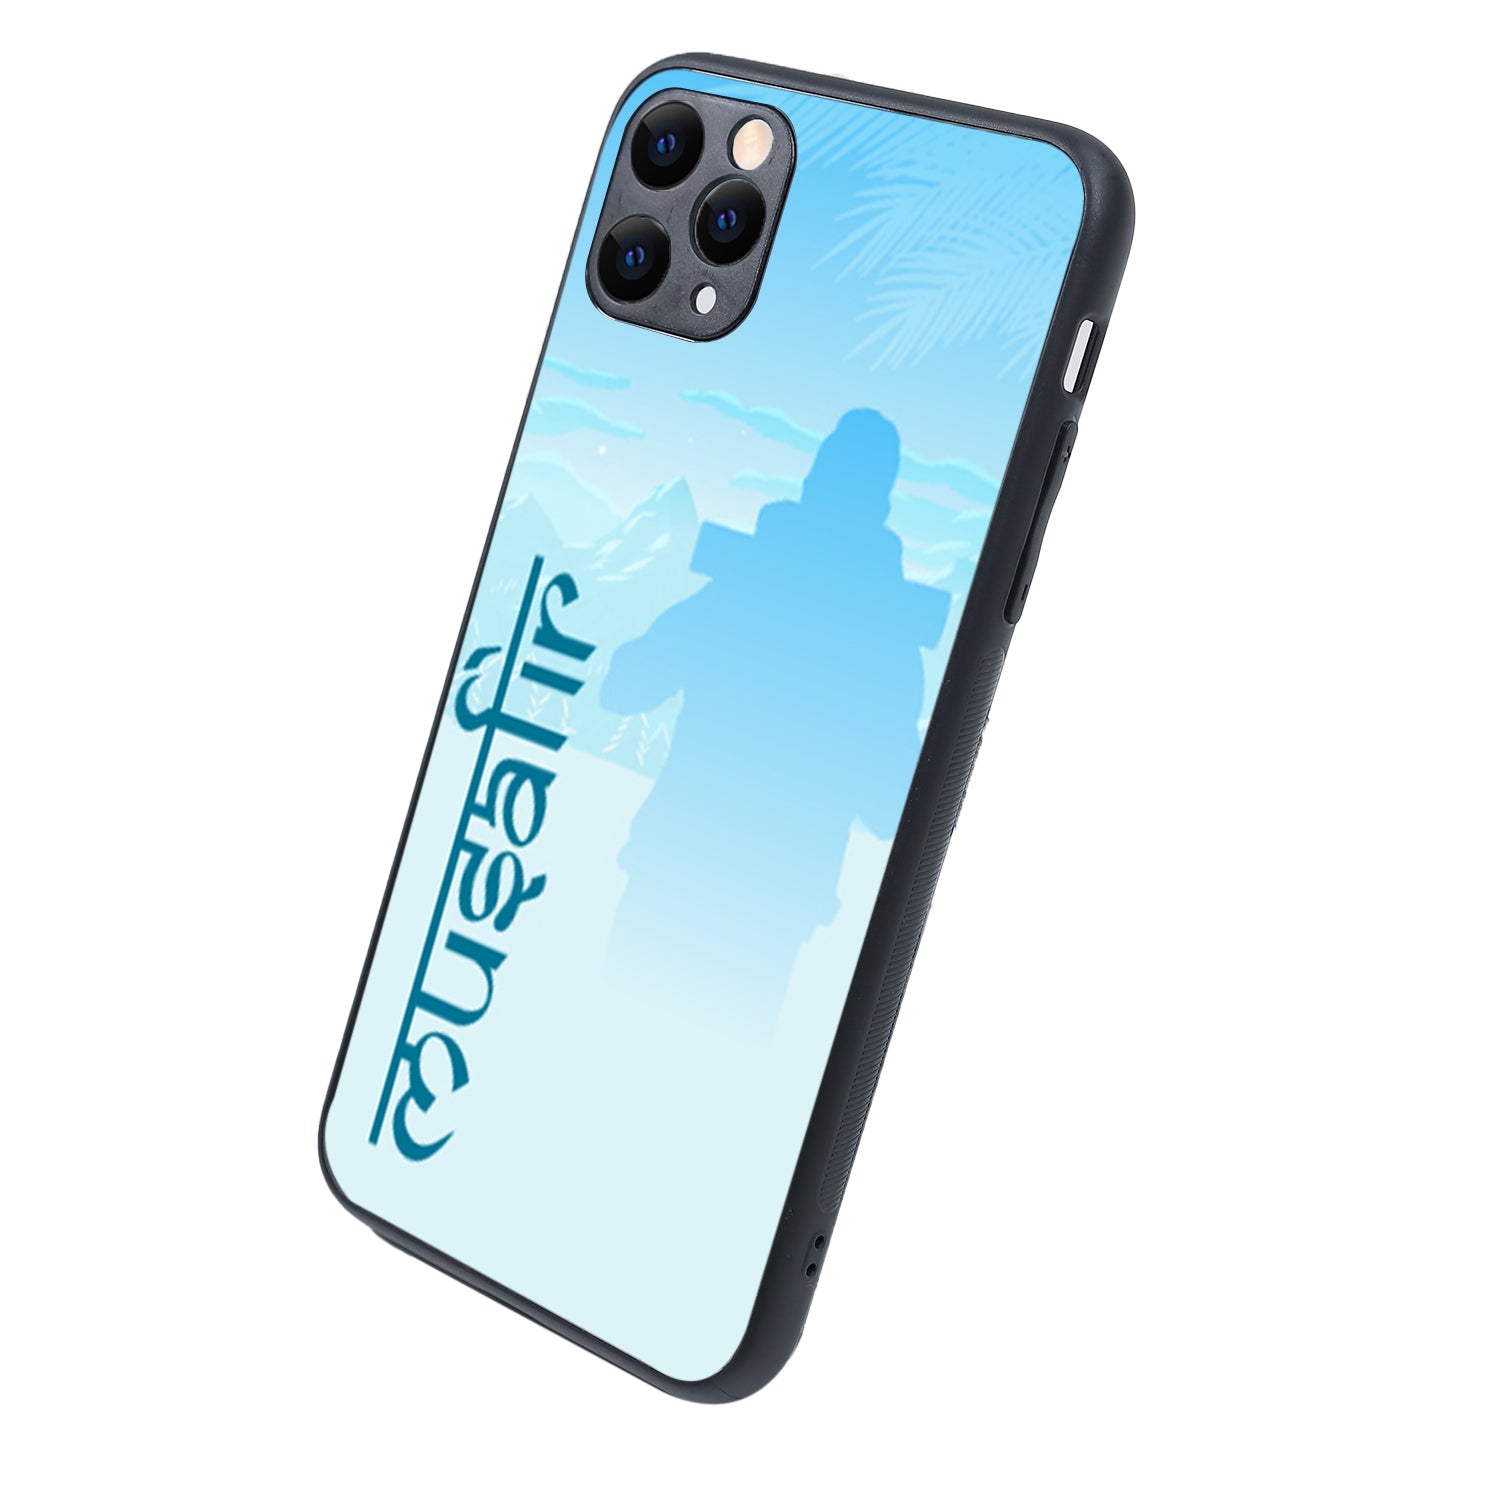 Musafir Travel iPhone 11 Pro Max Case